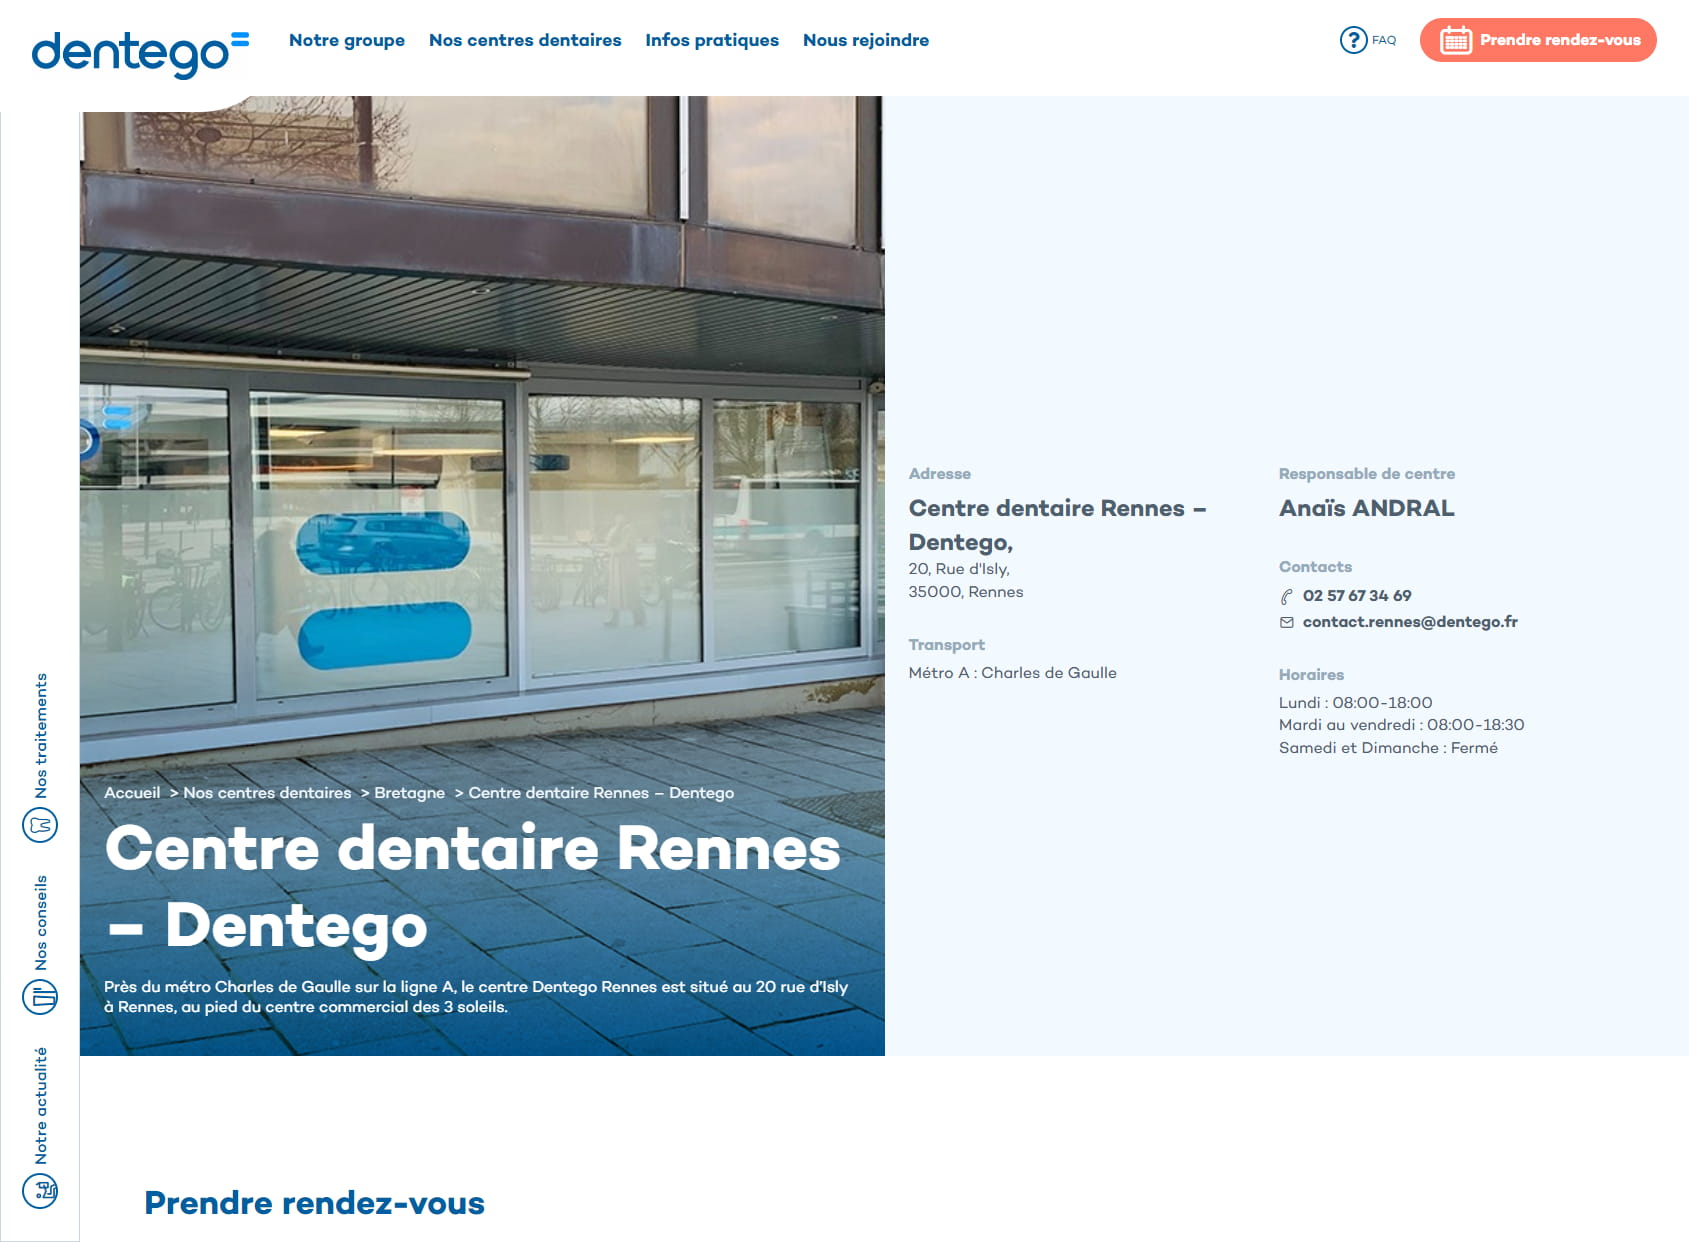 Centre Dentaire Rennes : Dentiste Rennes - Dentego